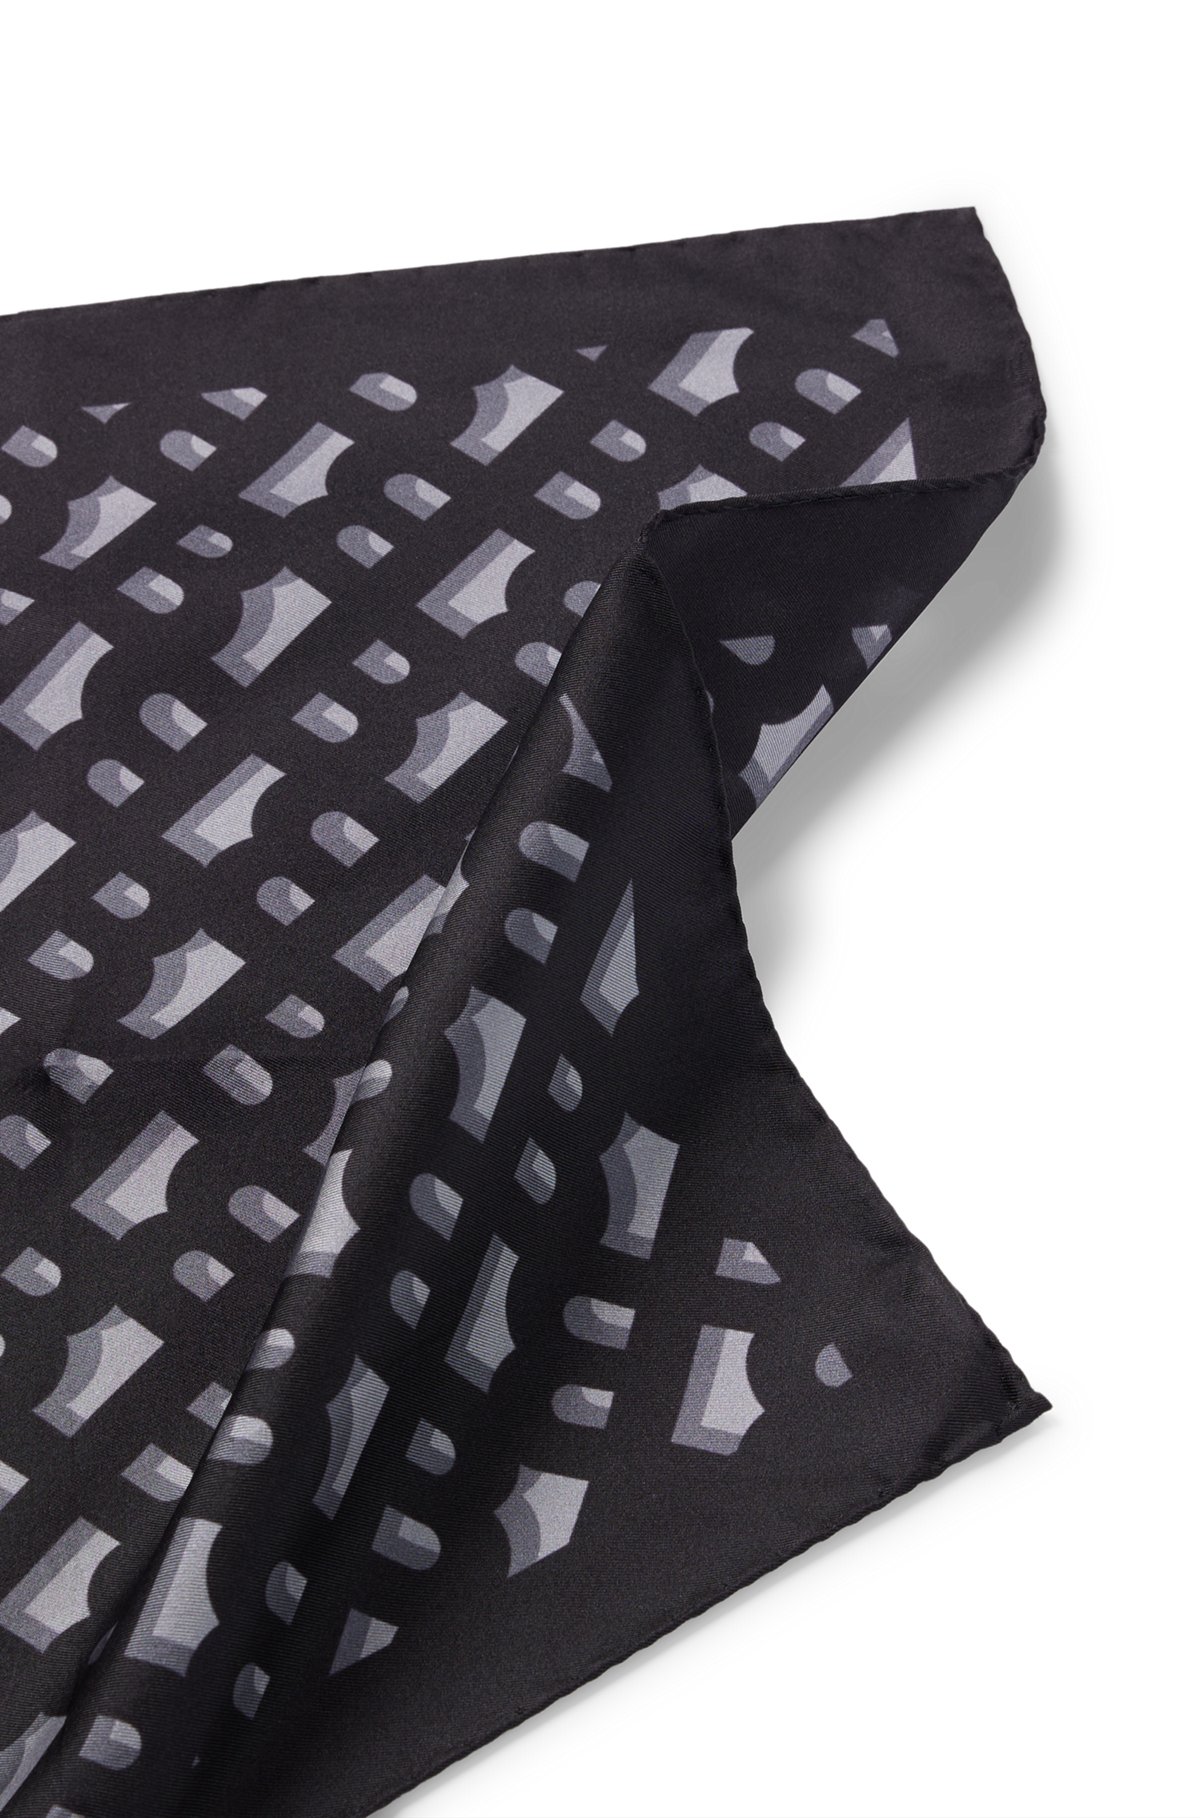 Silk pocket square with digital print, Black